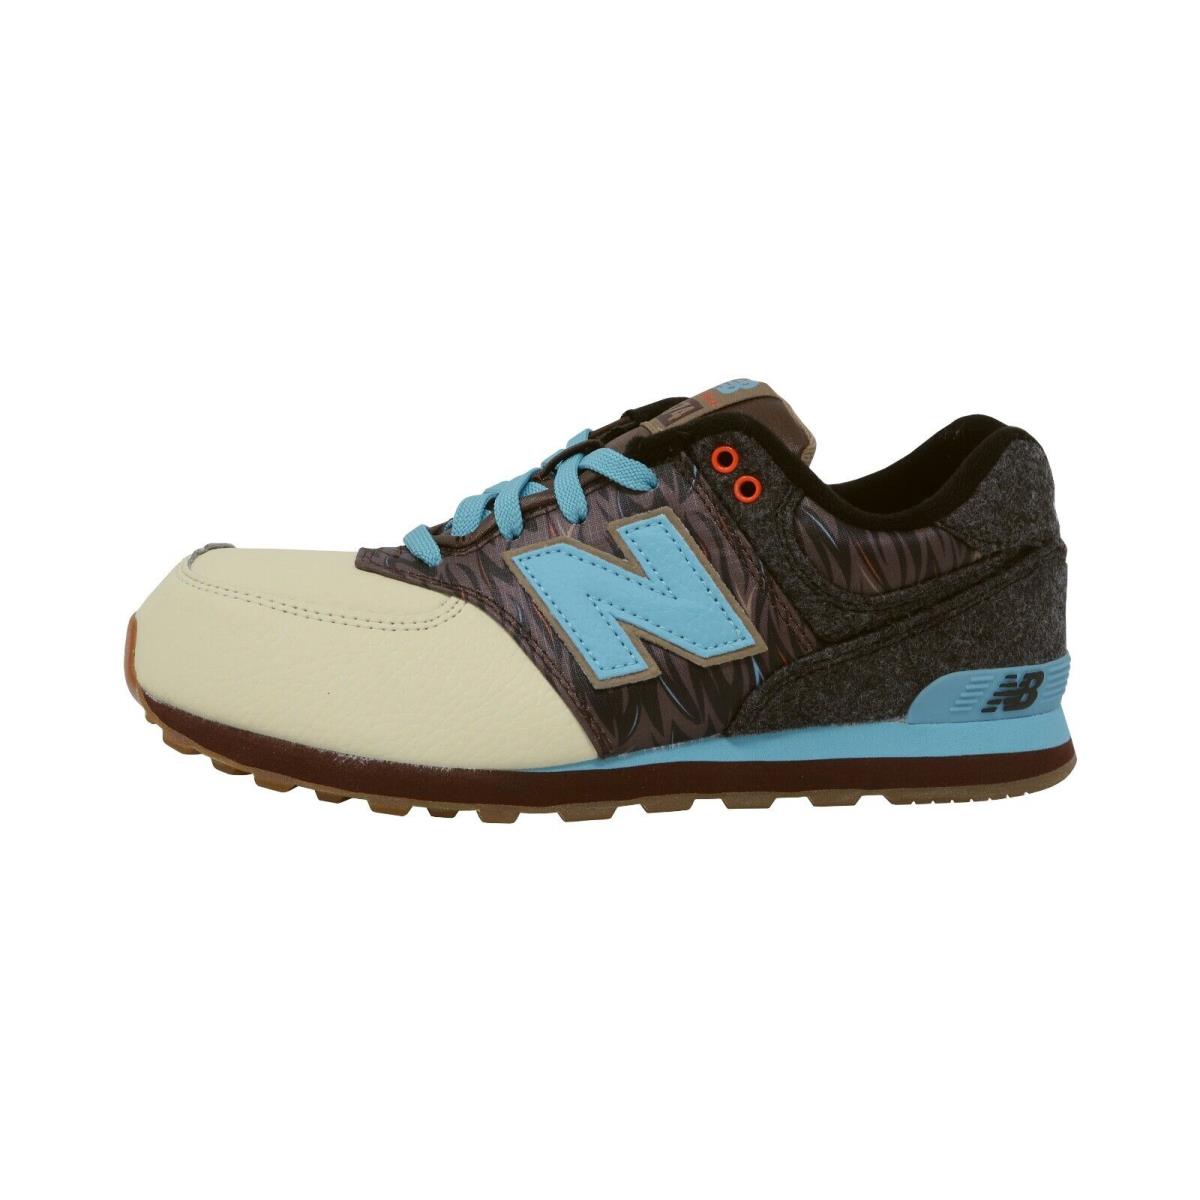 New Balance 574 Big Kids Running Shoes Sneakers KL574FMG - Multi Clor